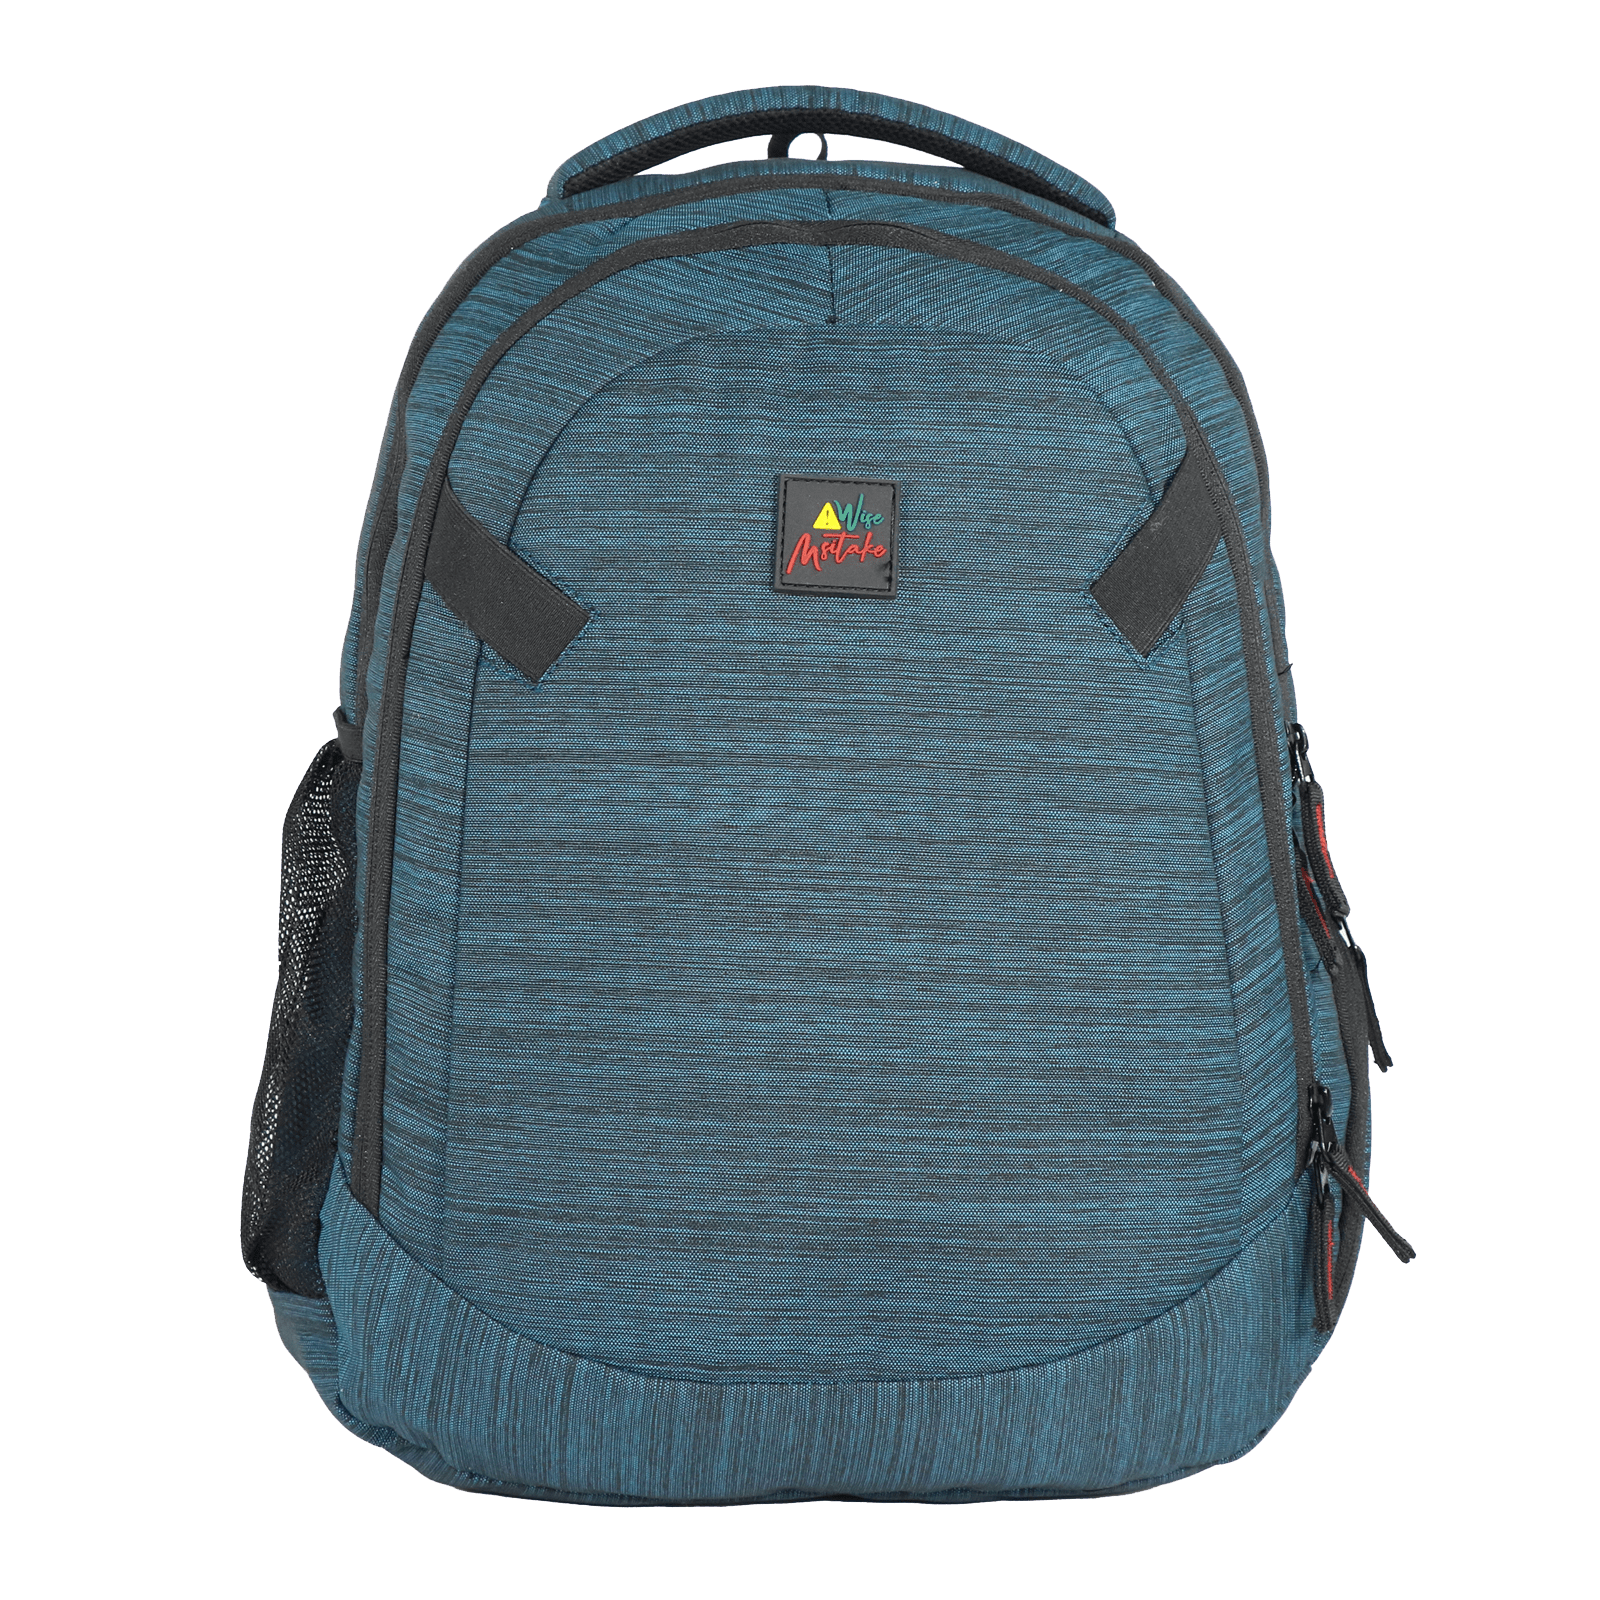 Wise Msitake Premium: Elegant Blue Unisex Backpack - wisemsitake.com